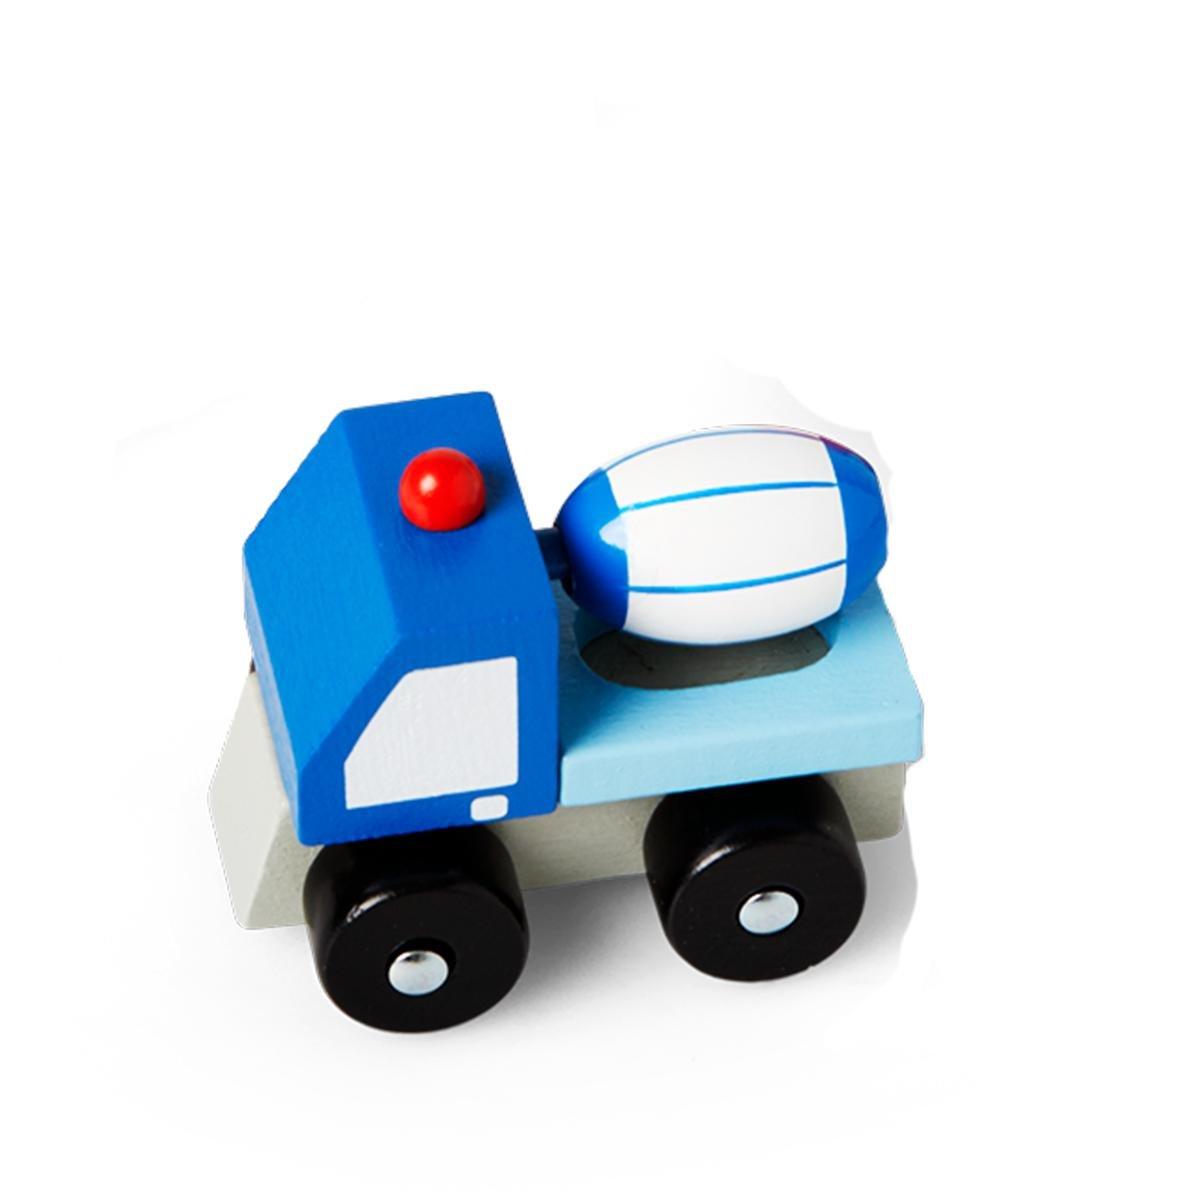 Blue wooden construction car